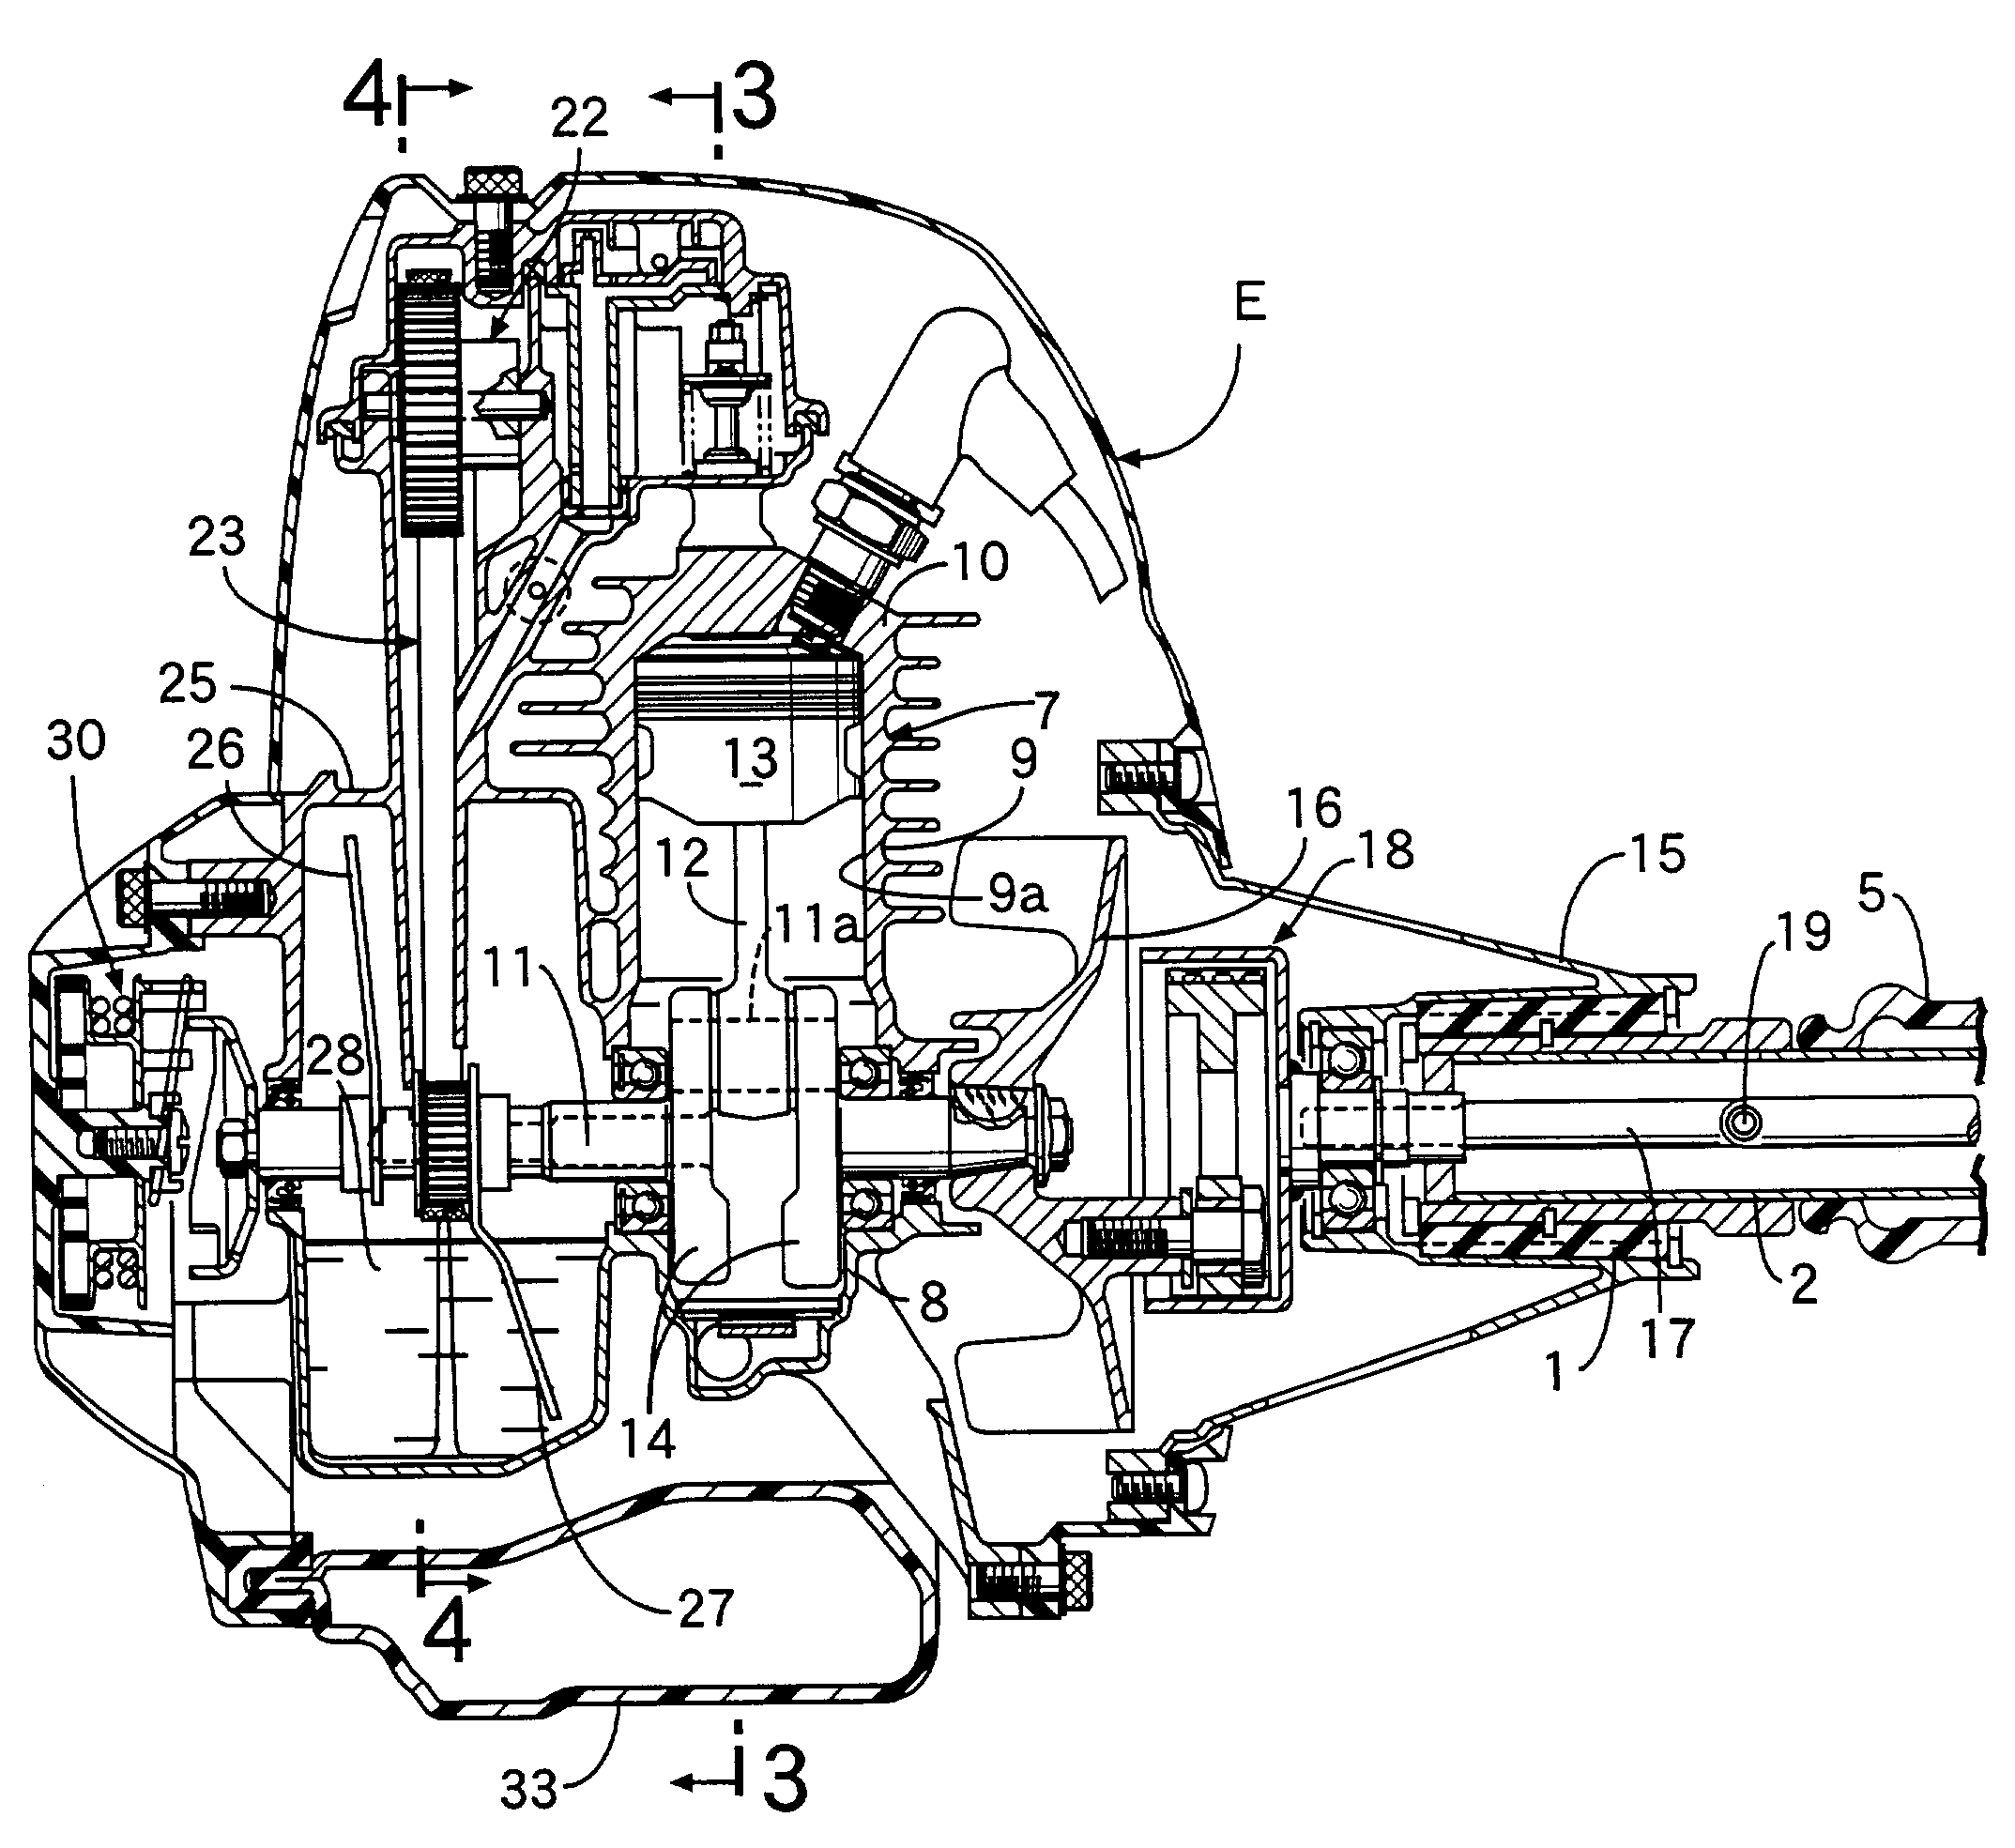 Engine operated machine system